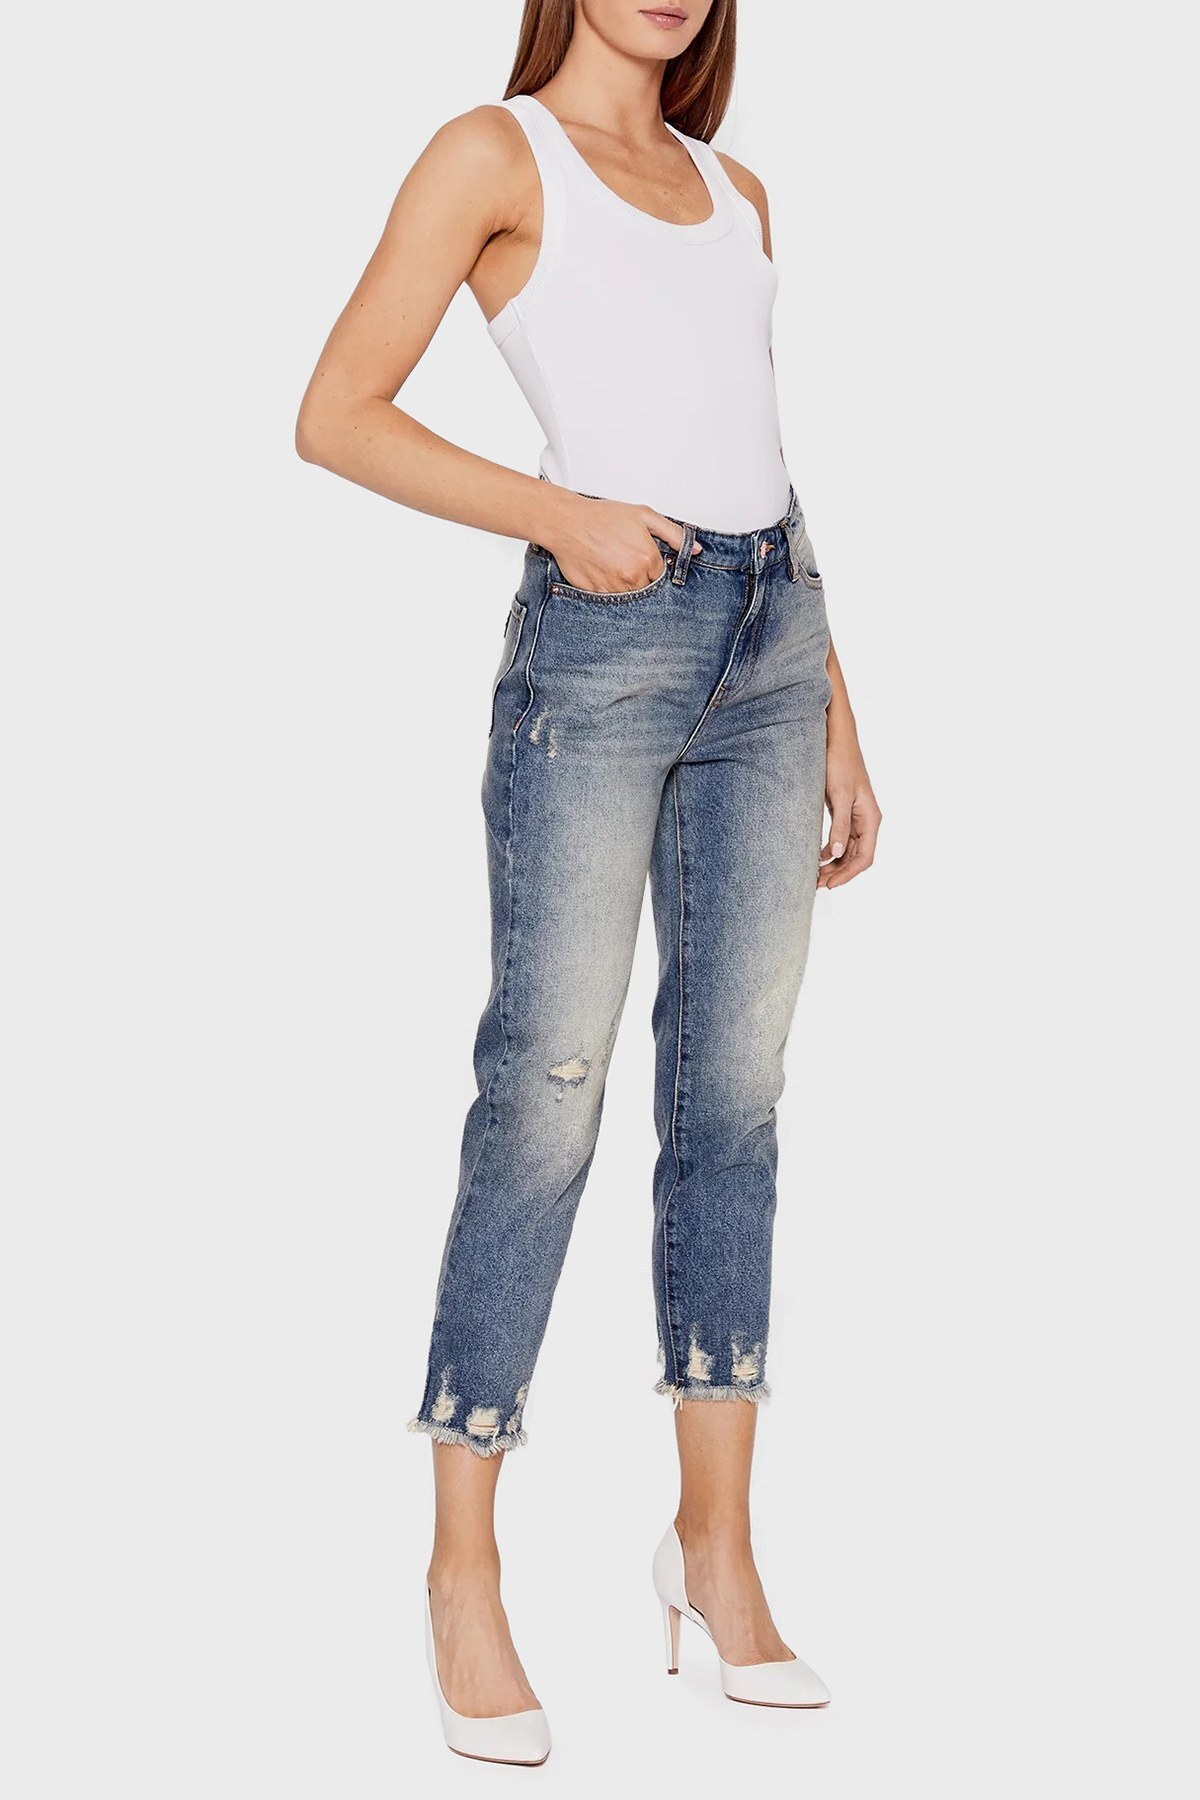 Armani Exchange Pamuklu Yırtık Detaylı Yüksek Bel Boyfriend Jeans Bayan Kot Pantolon 3LYJ16 Y1SHZ 1500 İNDİGO